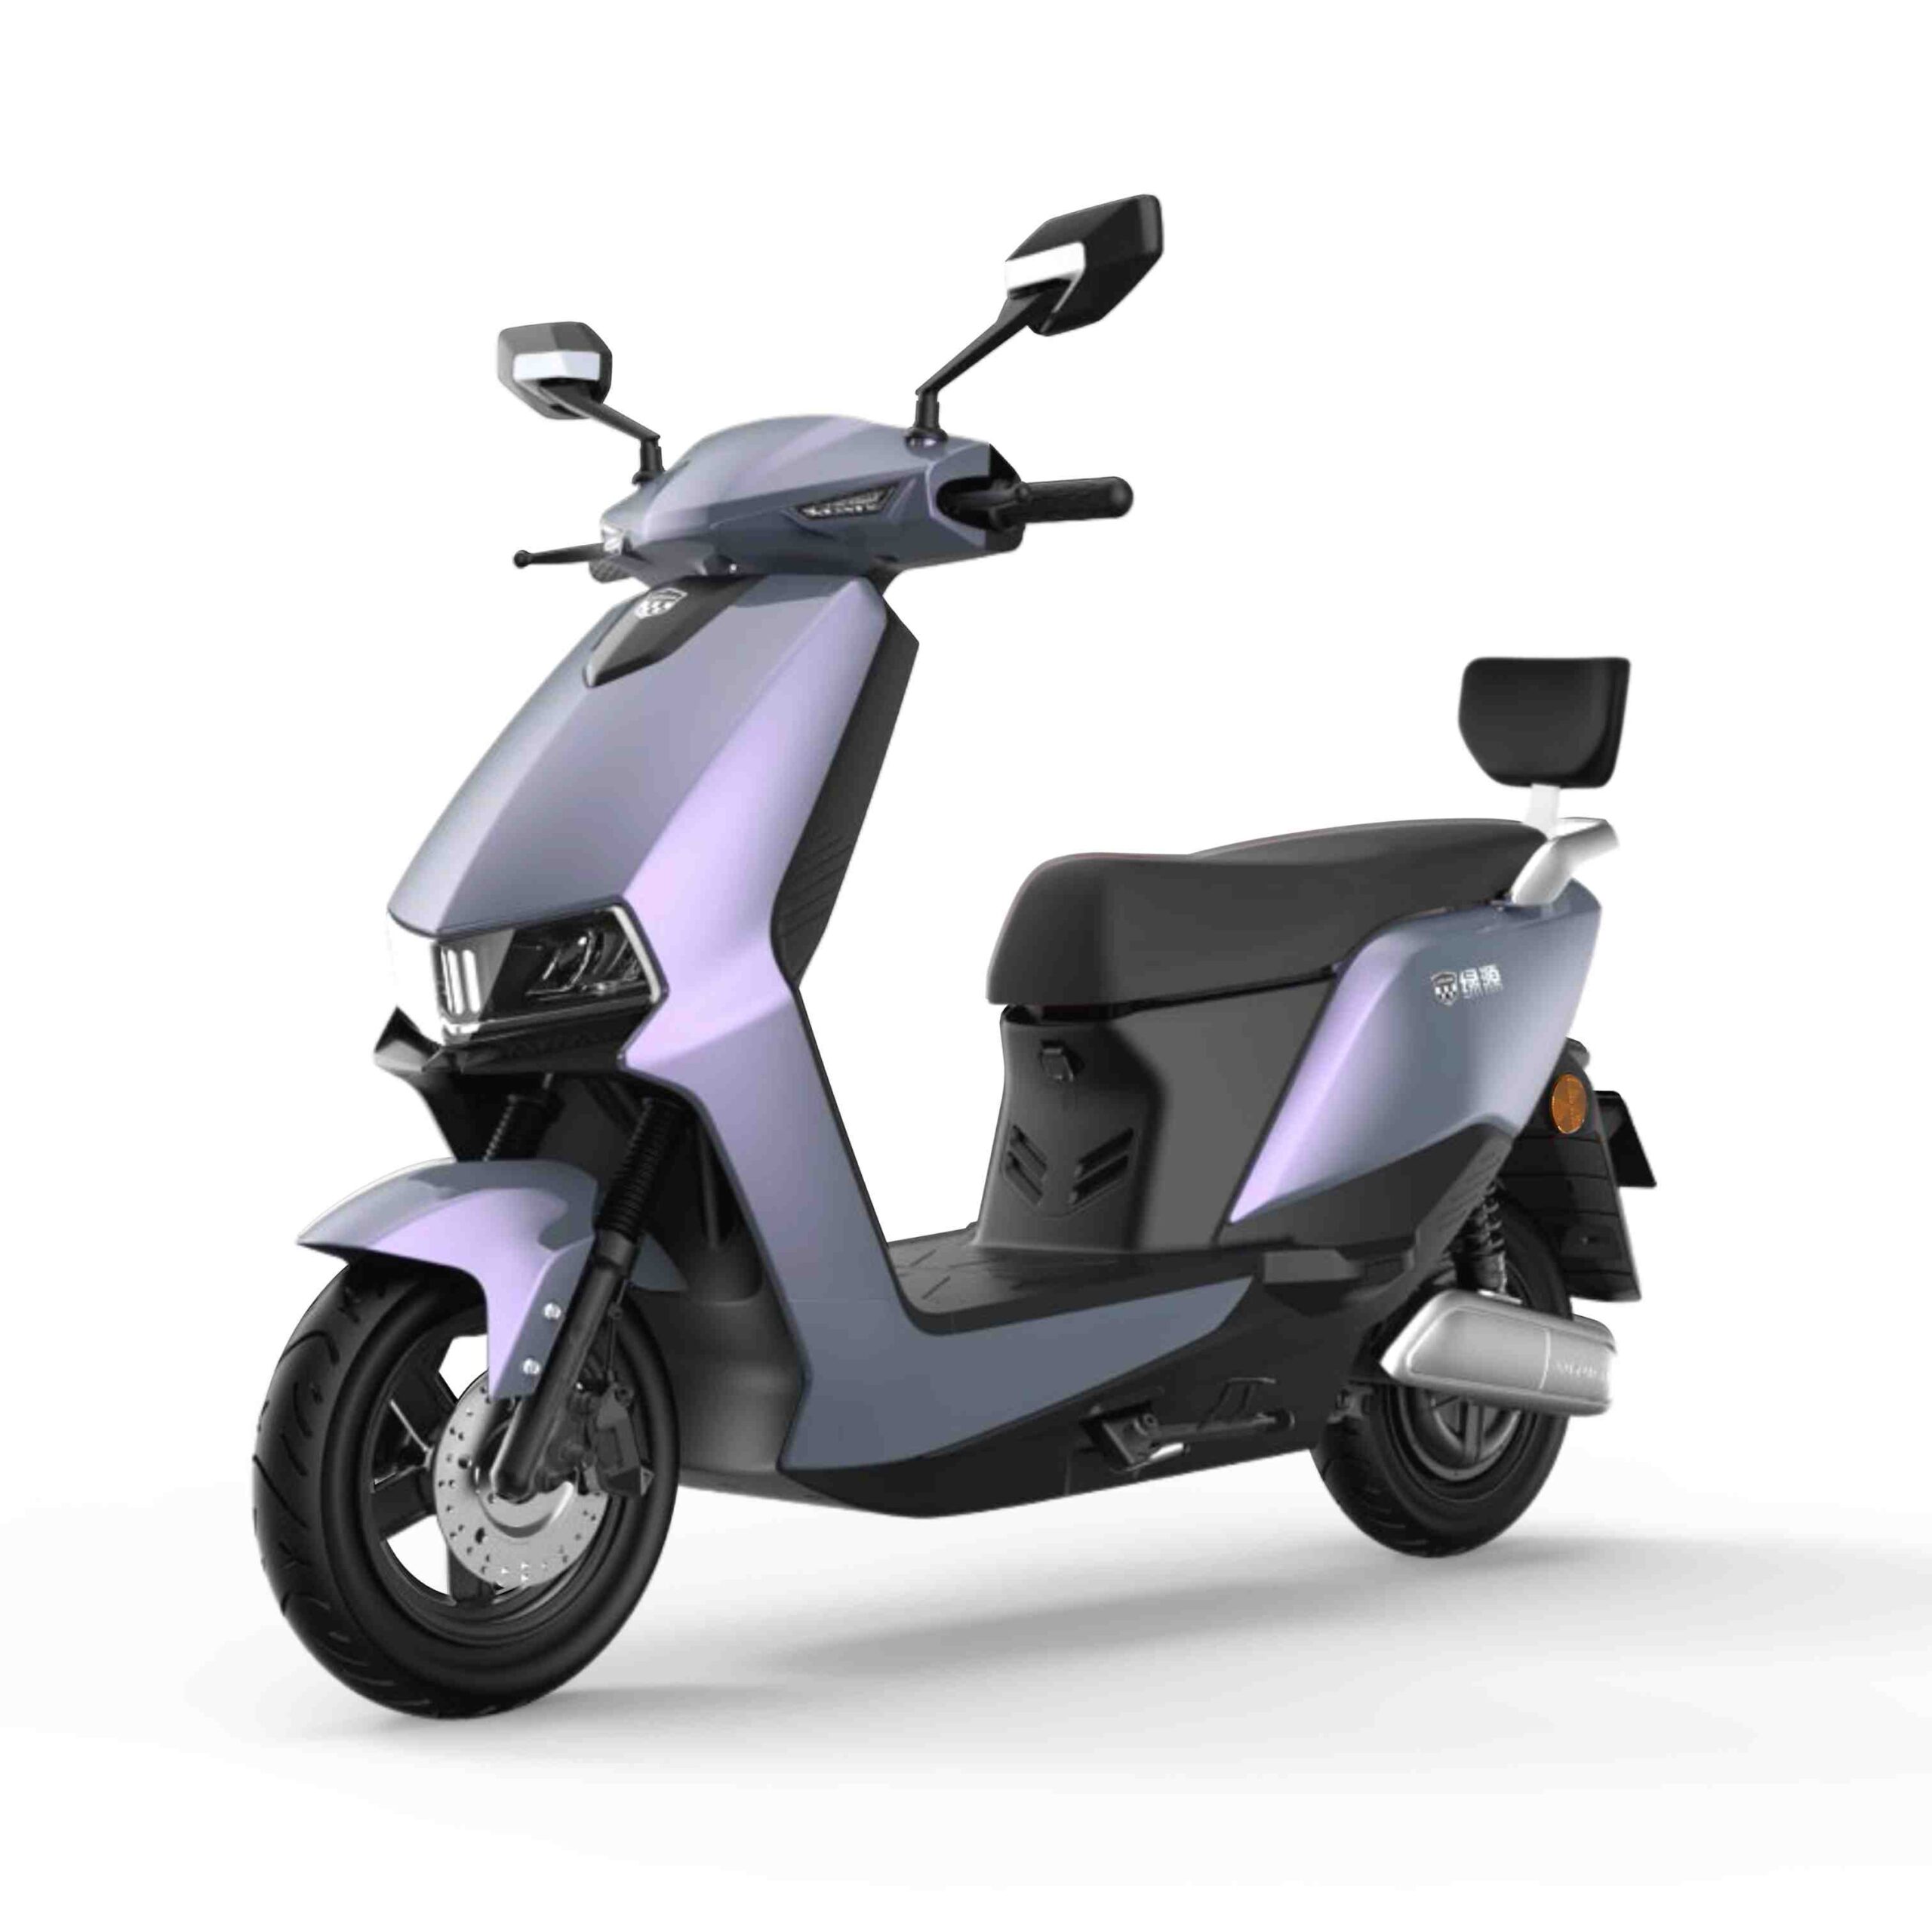 Moto scooter MKK Pa - Frontal